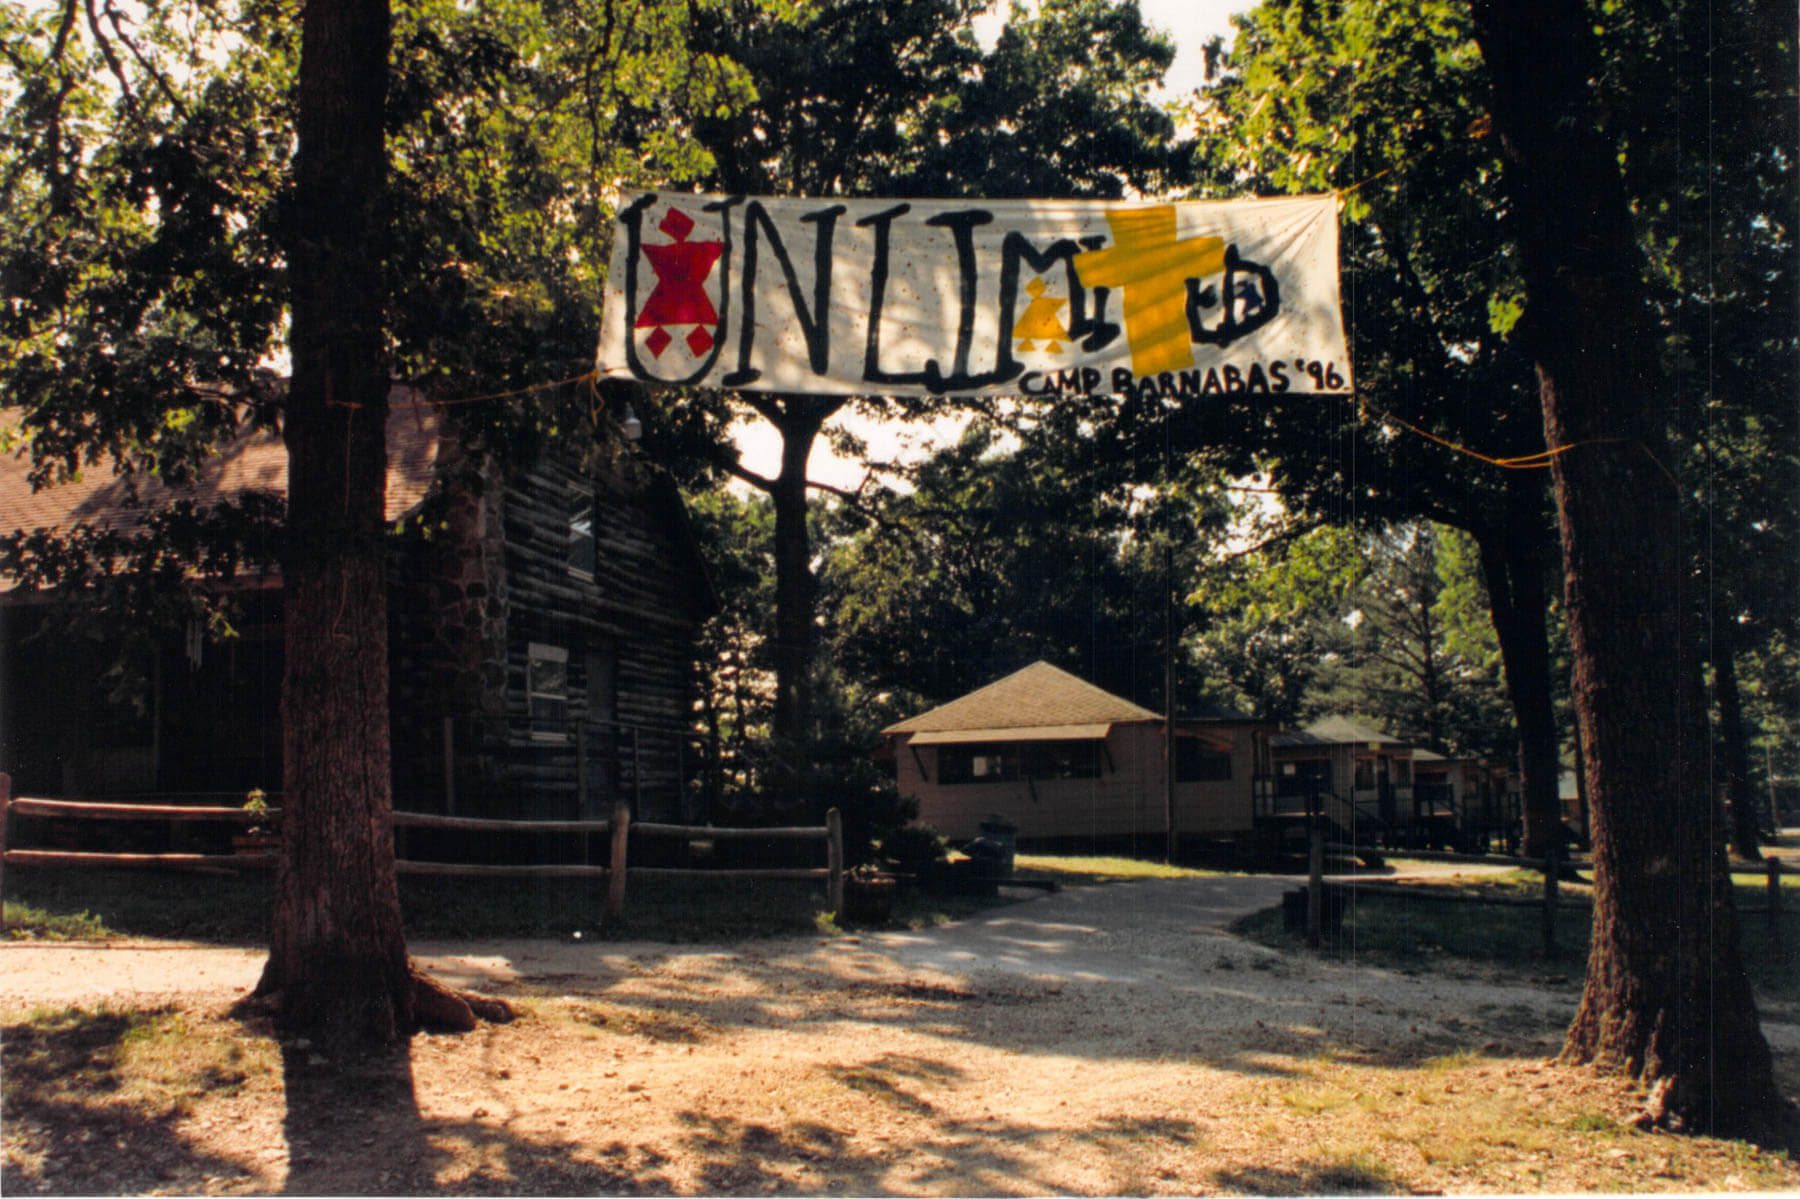 Camp Barnabas sign at the entrance